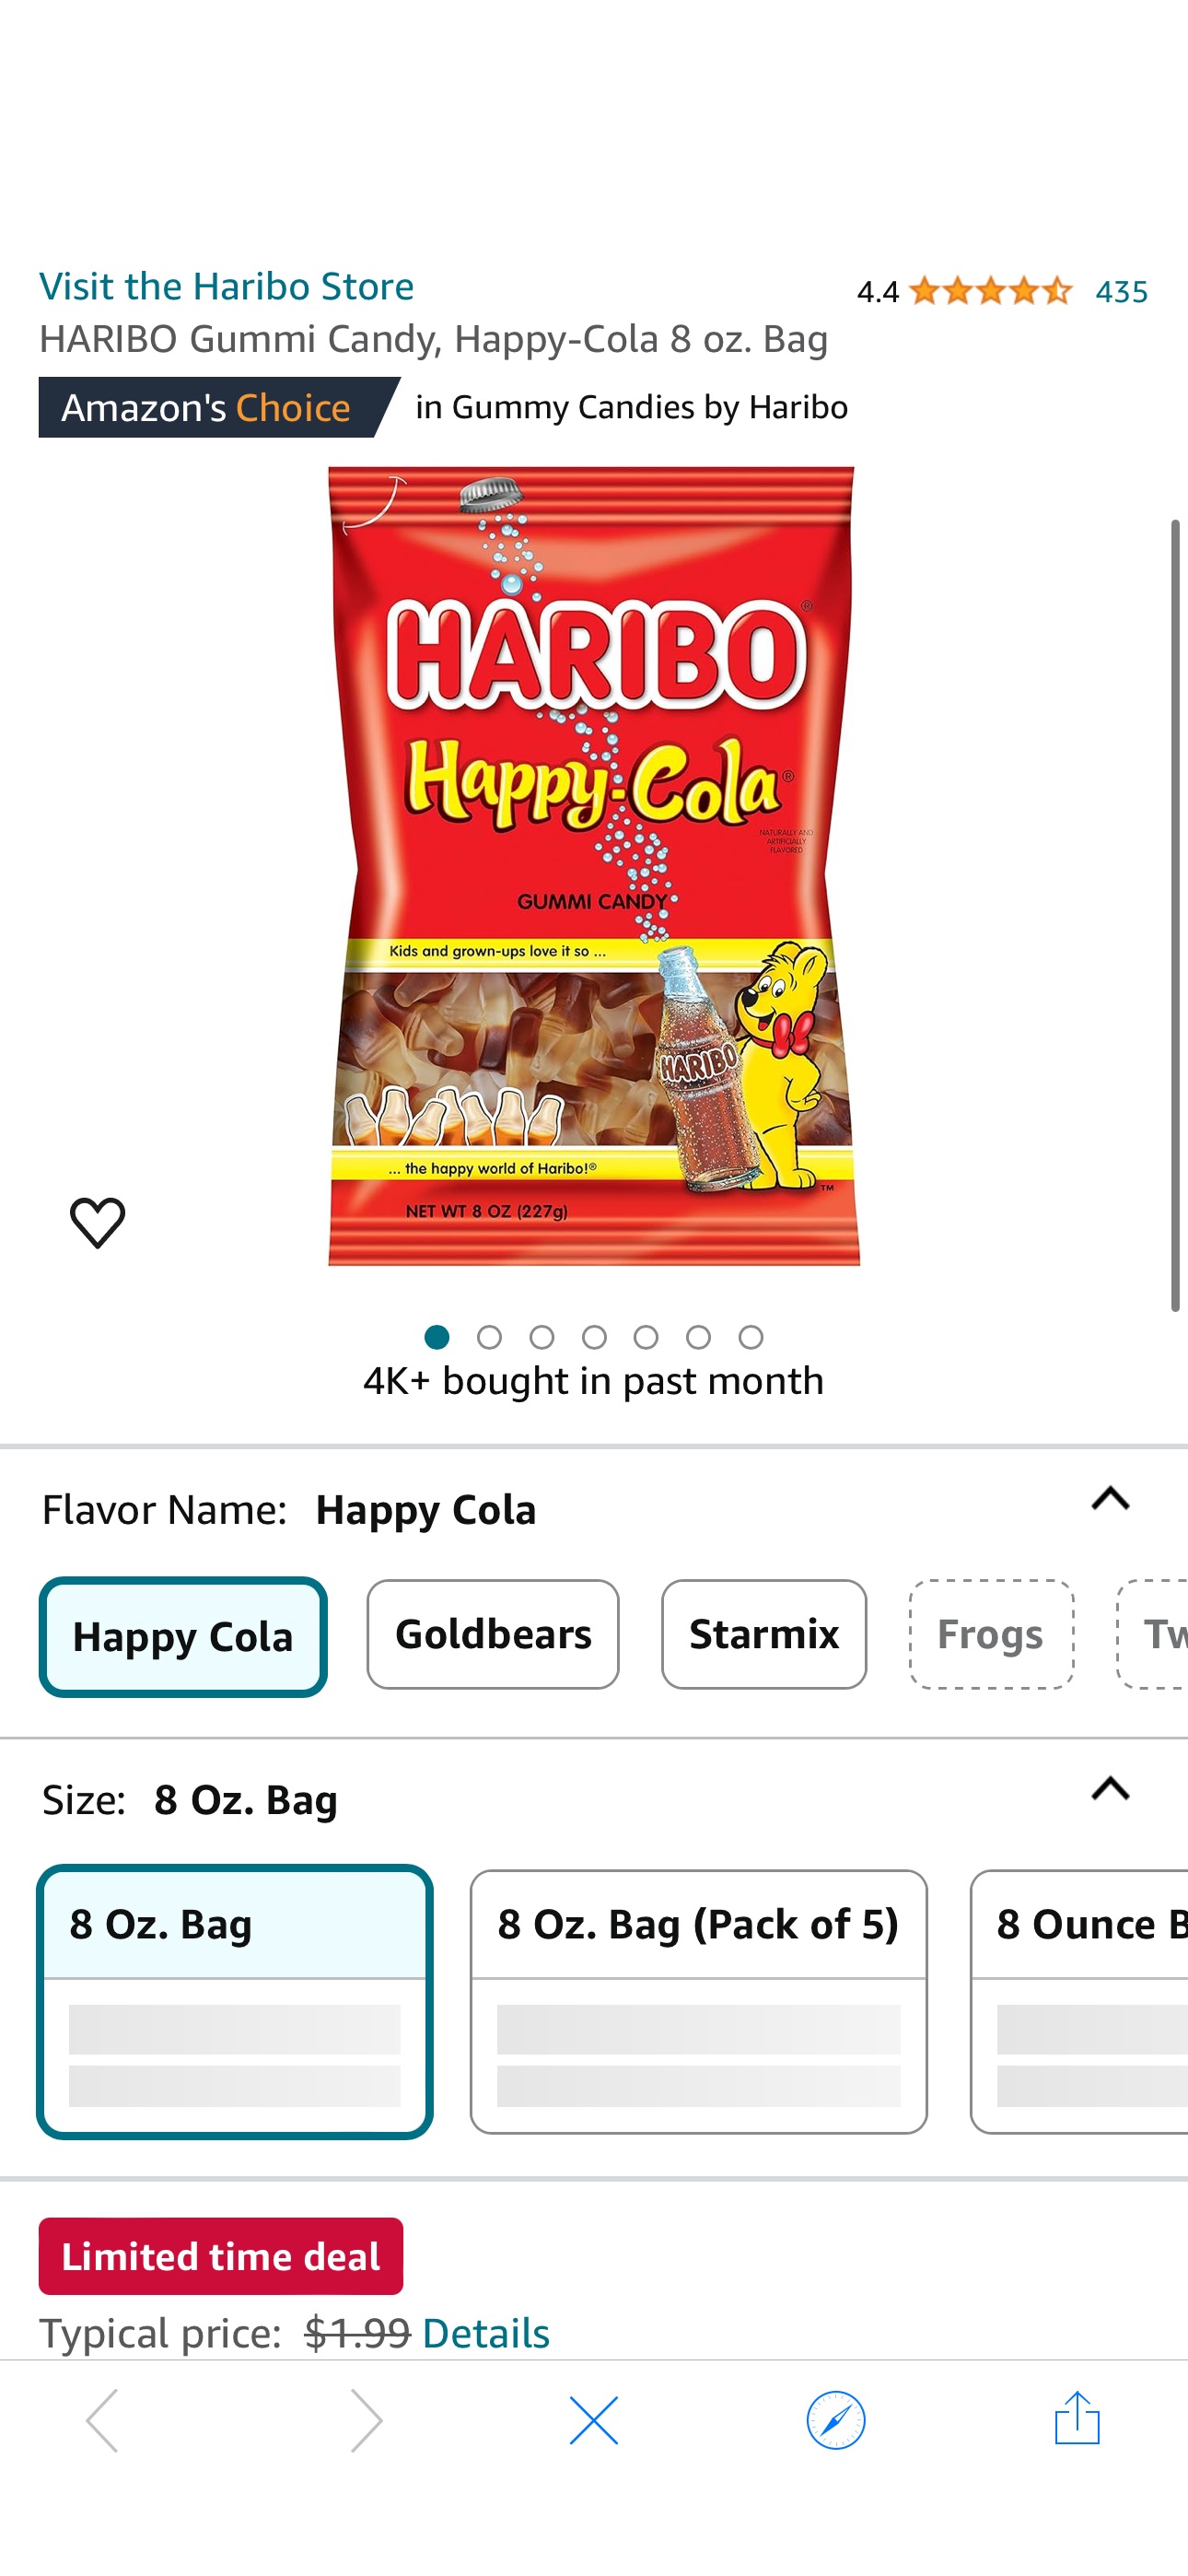 Amazon.com : HARIBO Gummi Candy, Happy-Cola 8 oz. Bag : Grocery & Gourmet Food